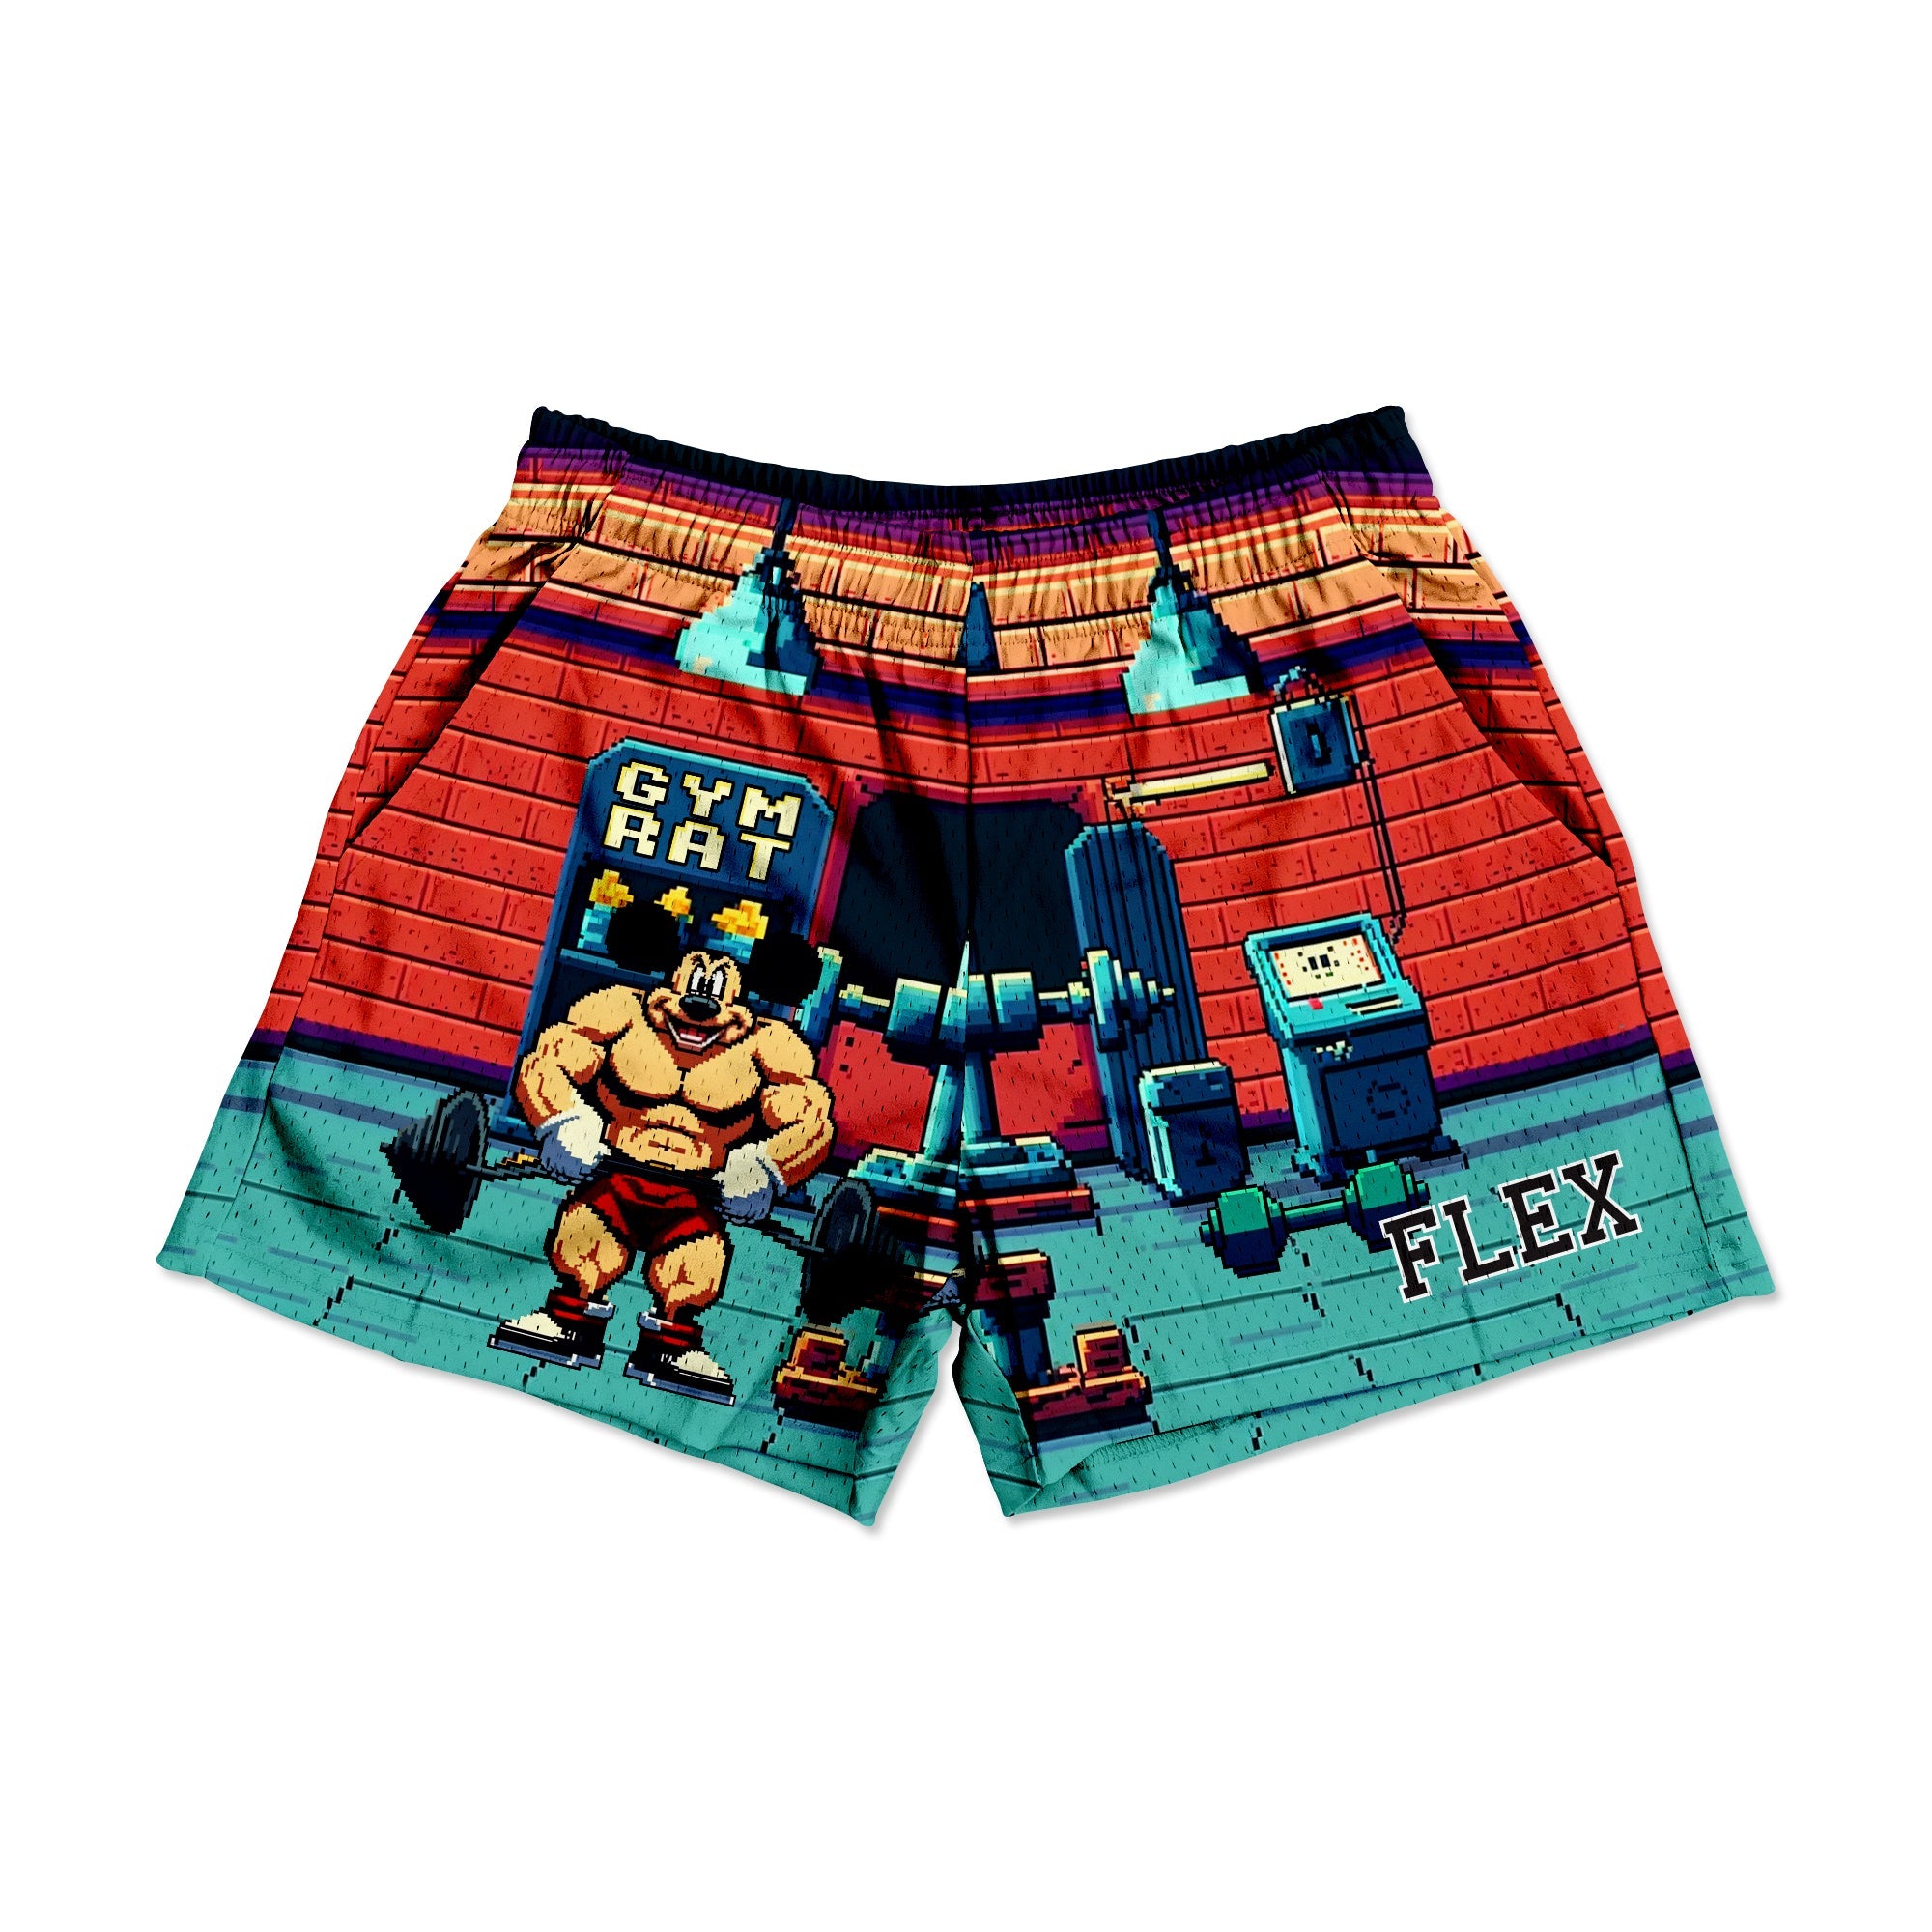 CV Mesh Flex Shorts 5 - Gymrats (PREORDER) - XL